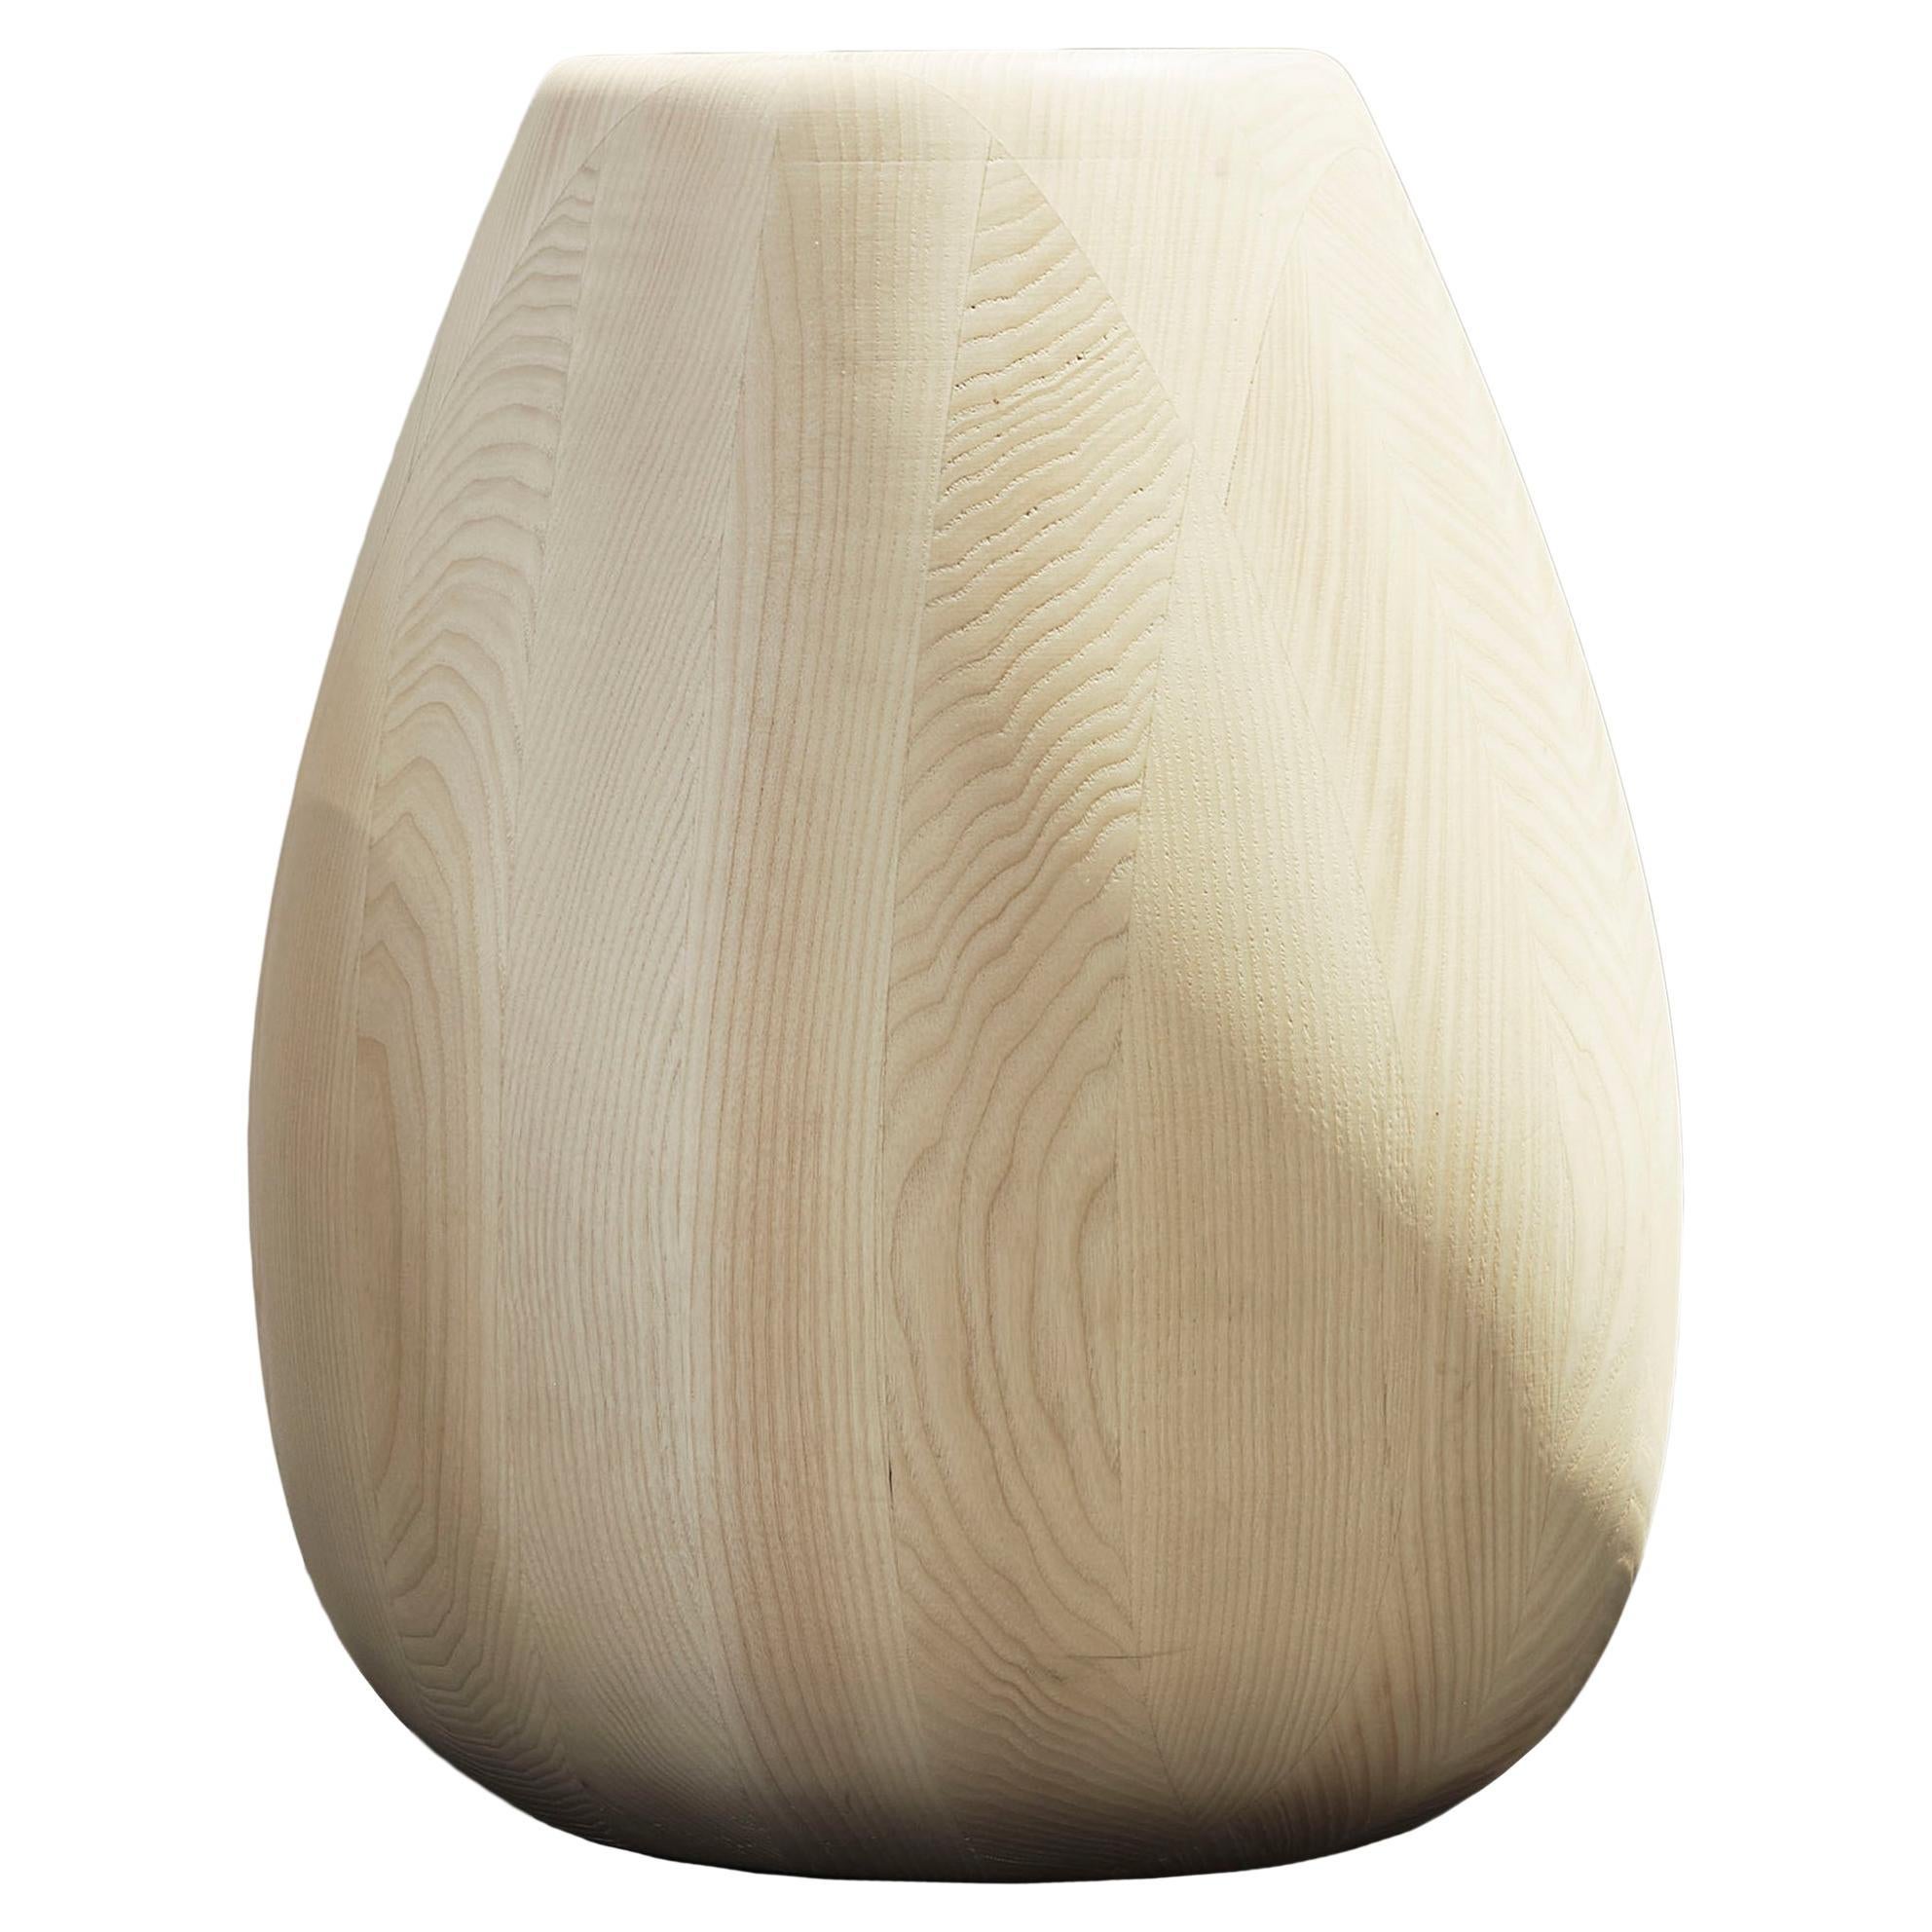 Ash Wood Vase h50 design Franco Albini - edit by Officina della Scala